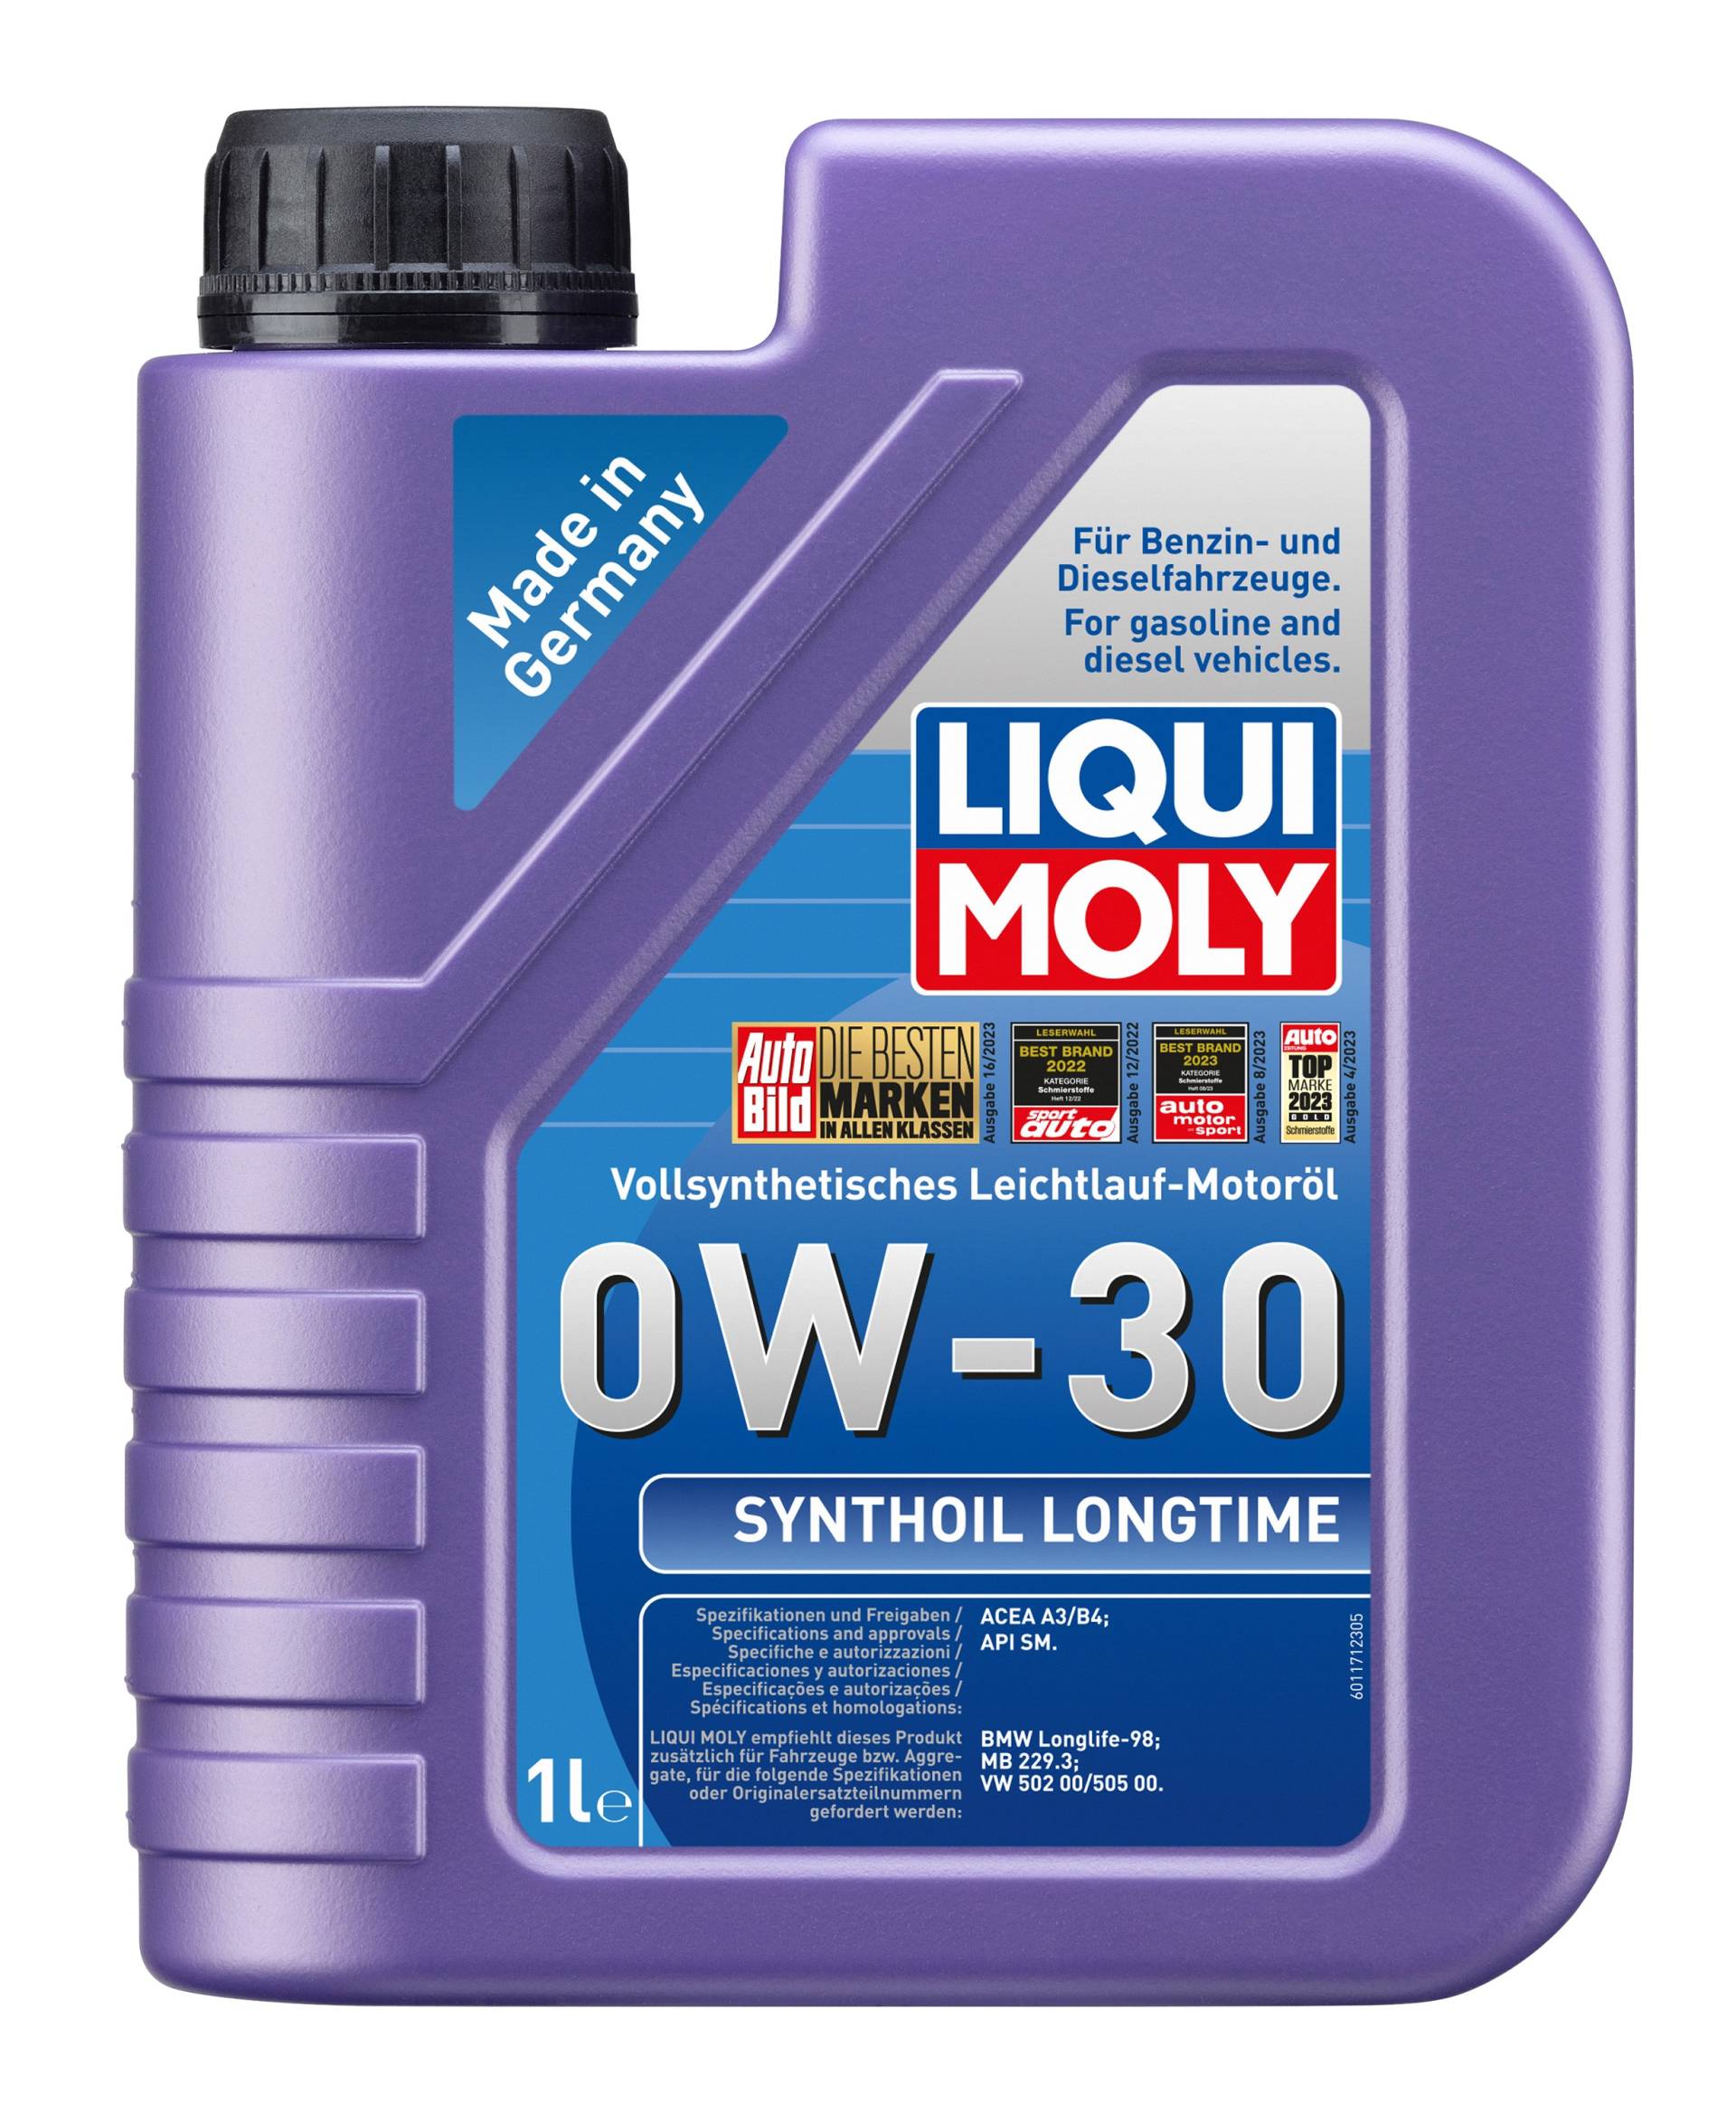 Liqui Moly Synthoil Longtime 0W-30 Motoröl, 1 L von Liqui Moly